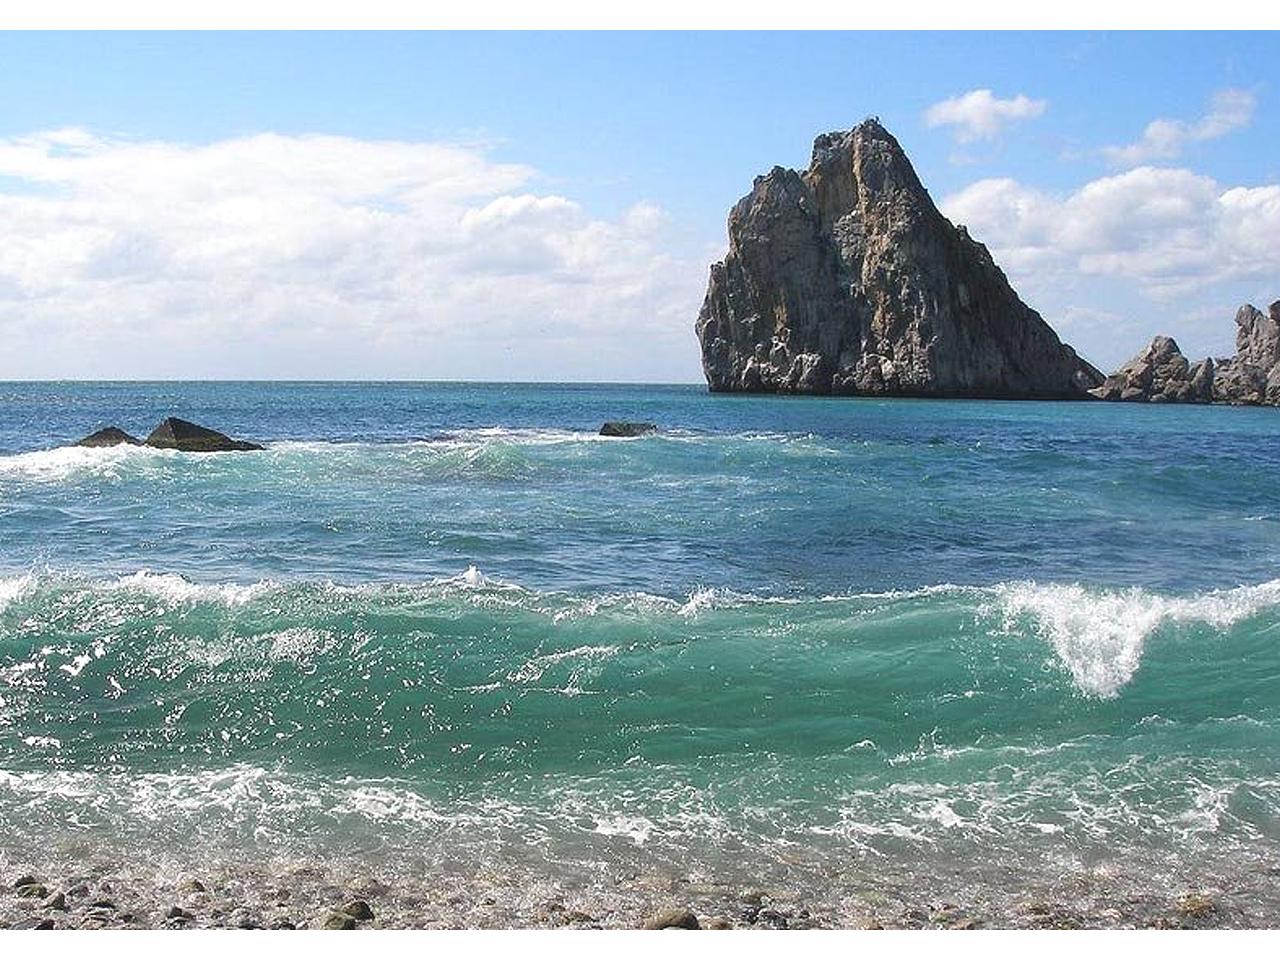 обои Скала и море фото